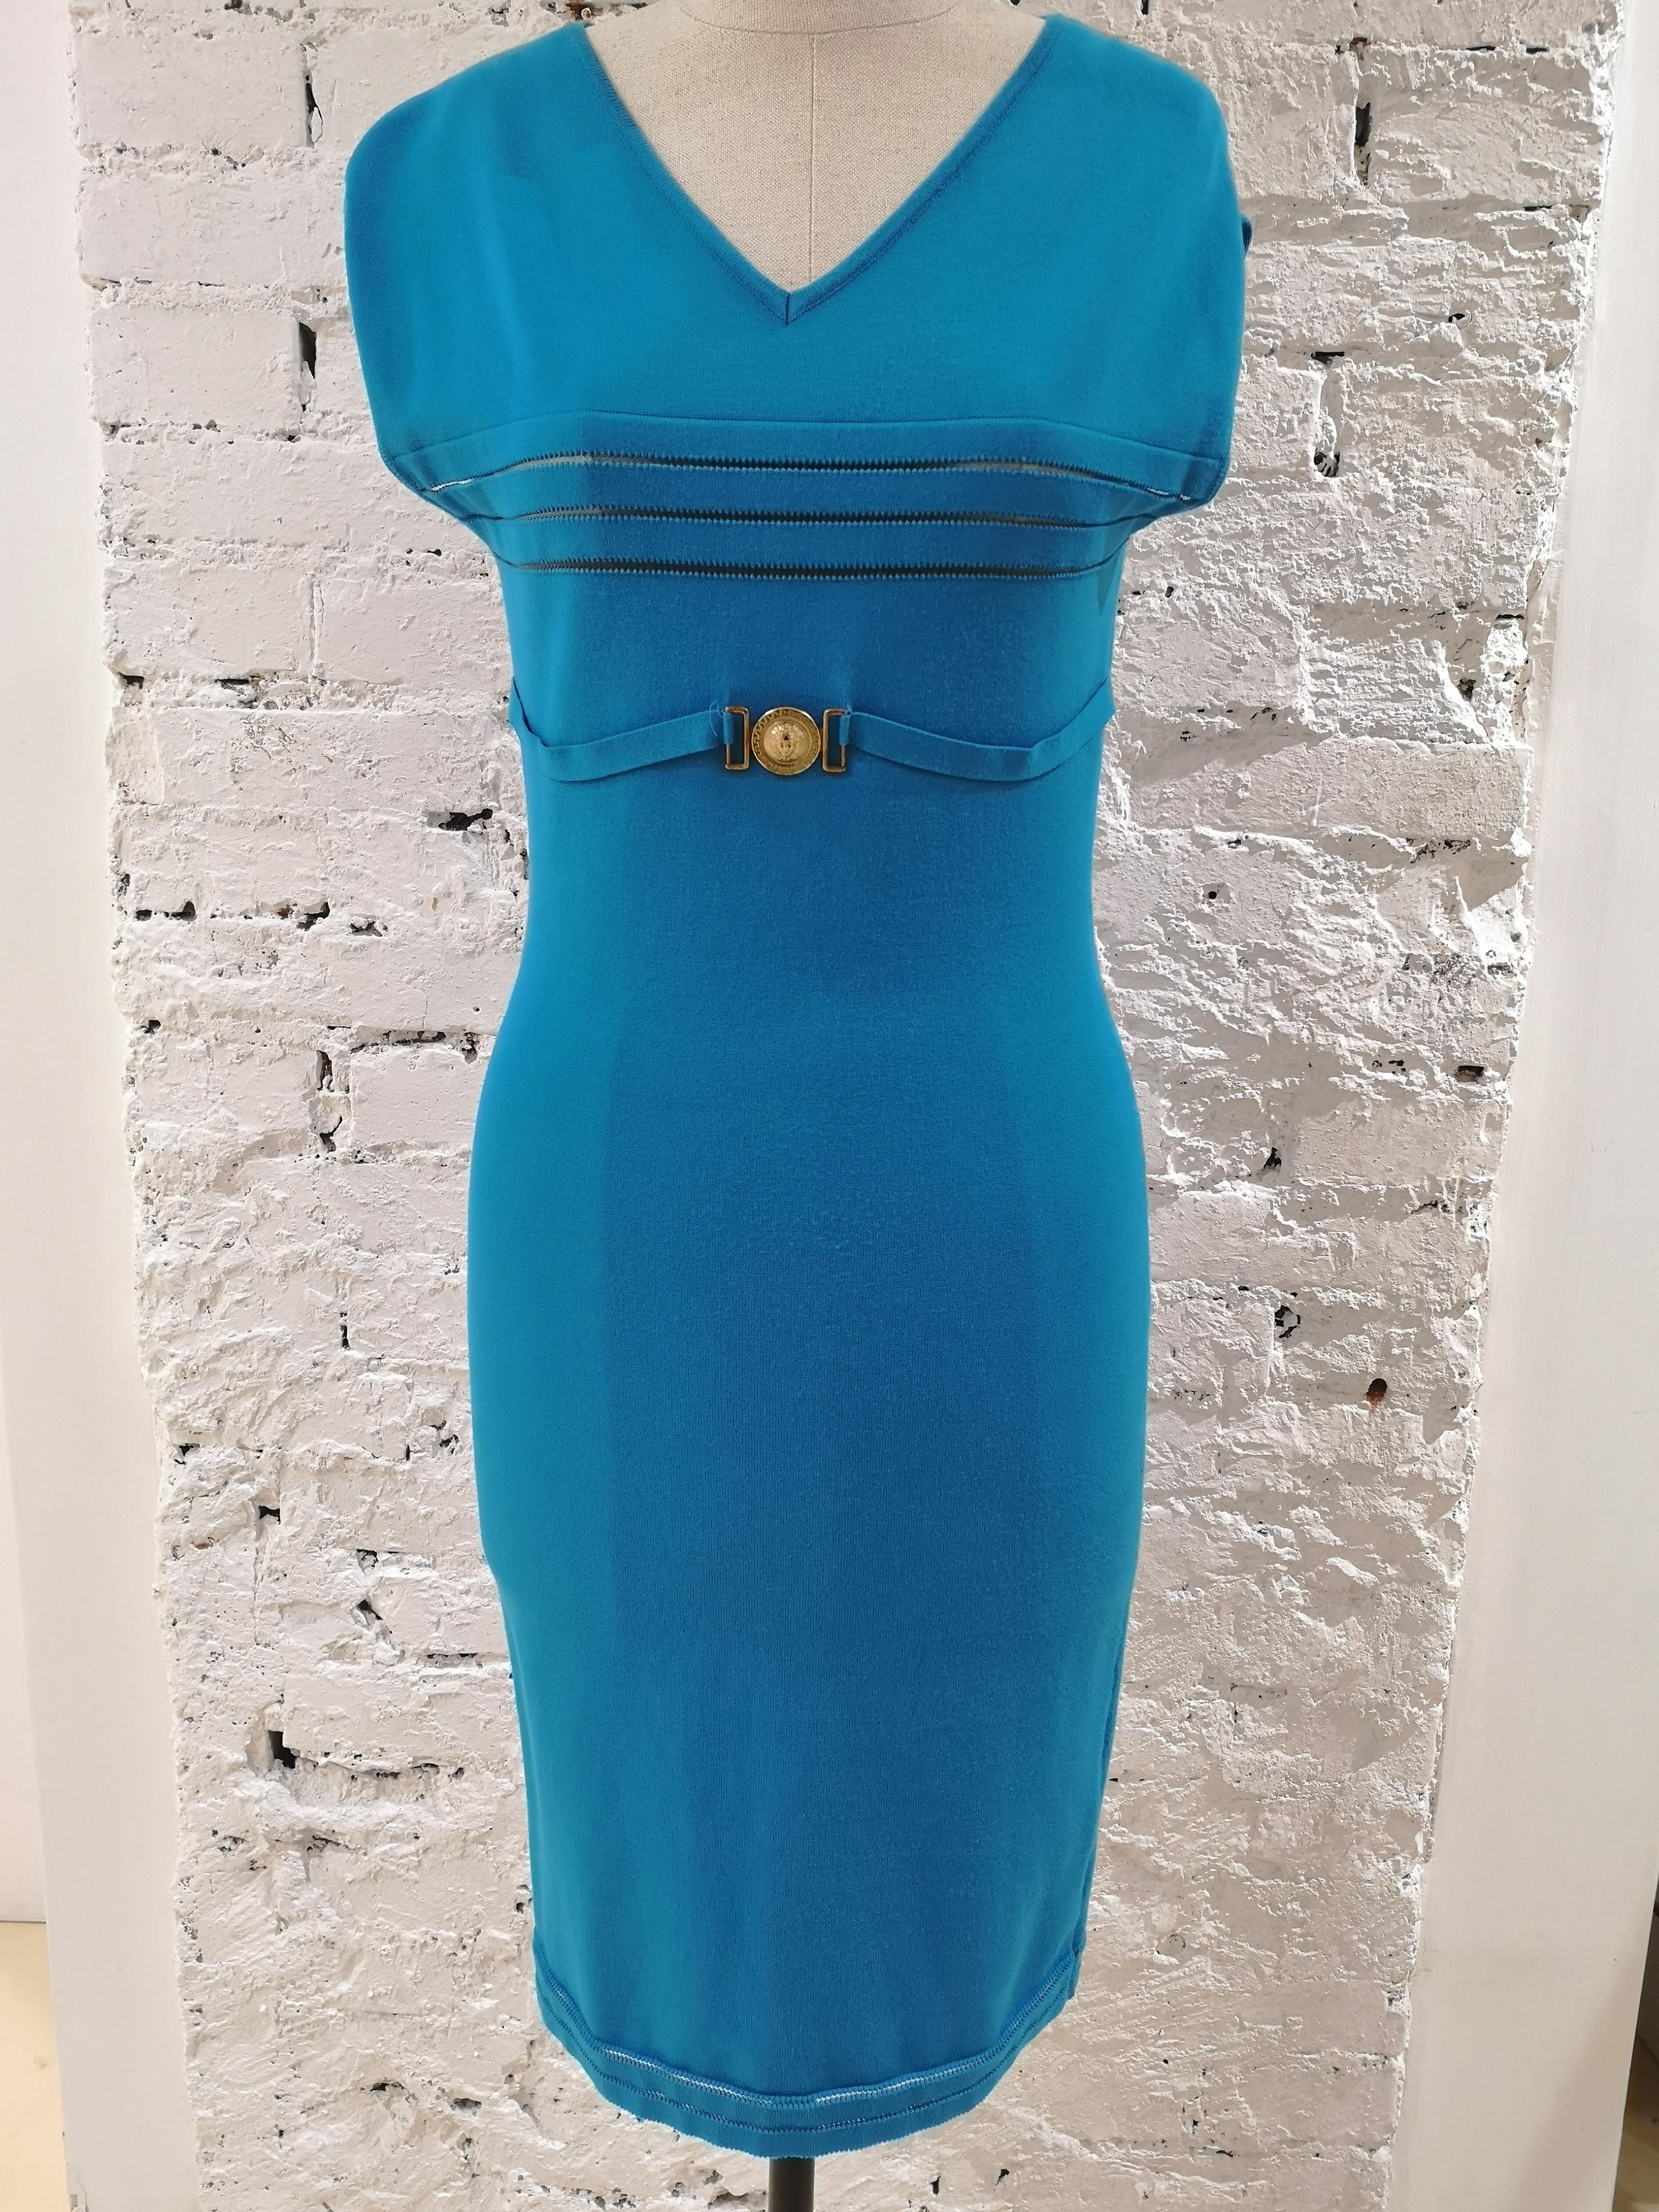 Versace Collecction Blue Dress NWOT 4